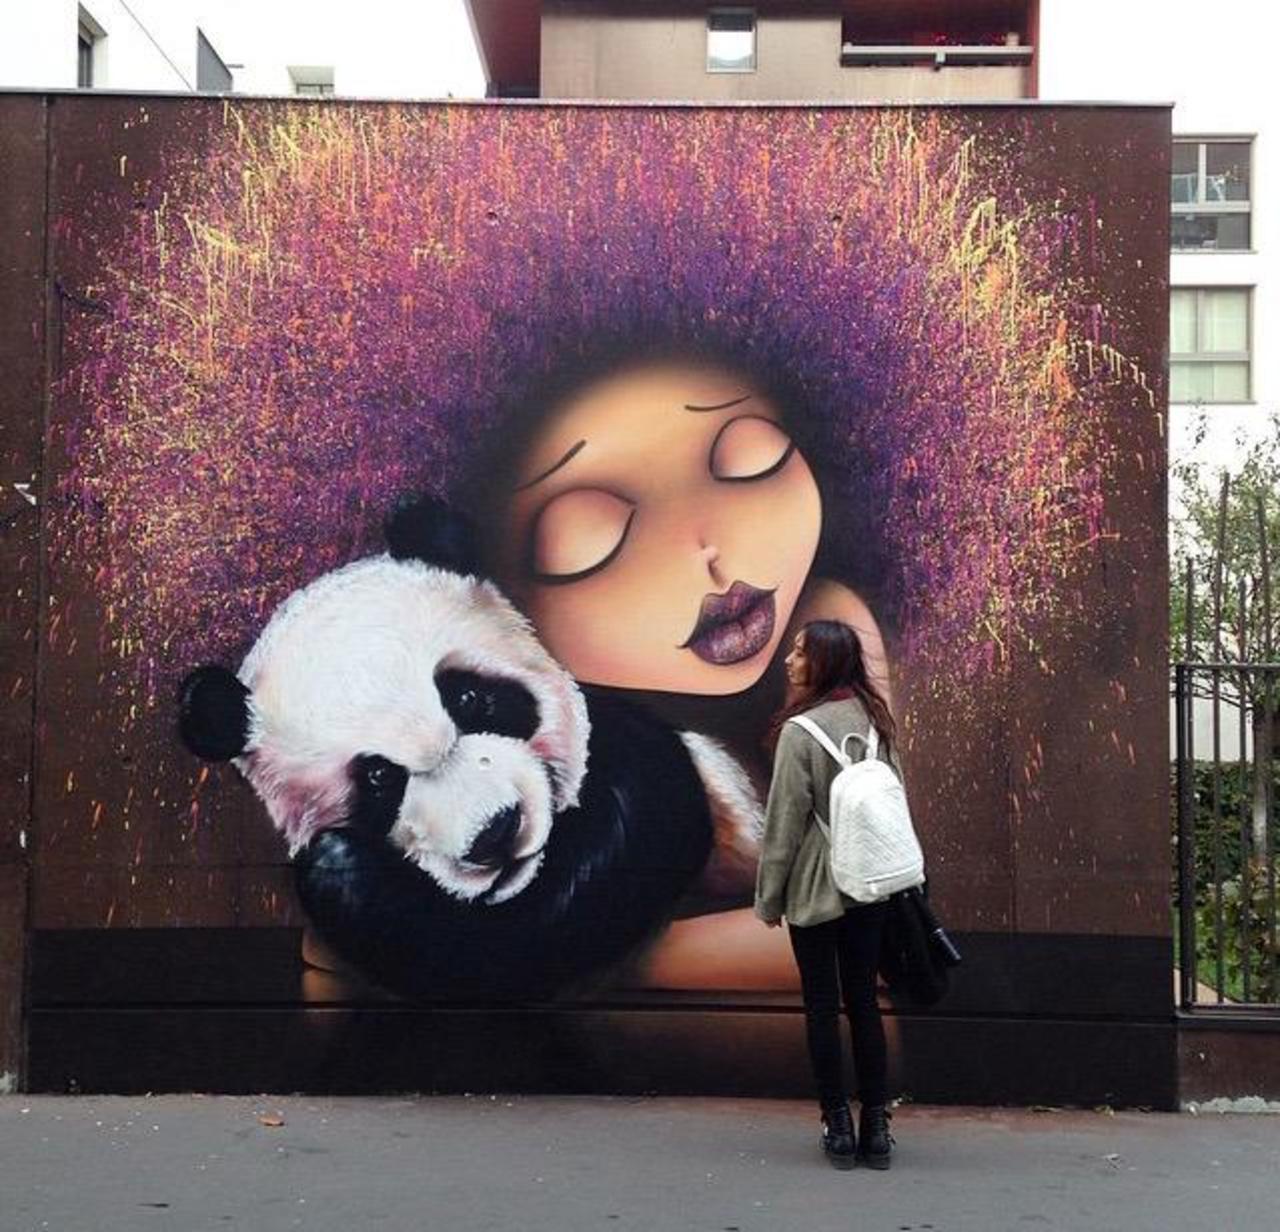 RT @mzajaeh: Street Art by VinieGraffiti in Paris 

#art #graffiti #mural #streetart http://t.co/CDWjLGR2oA